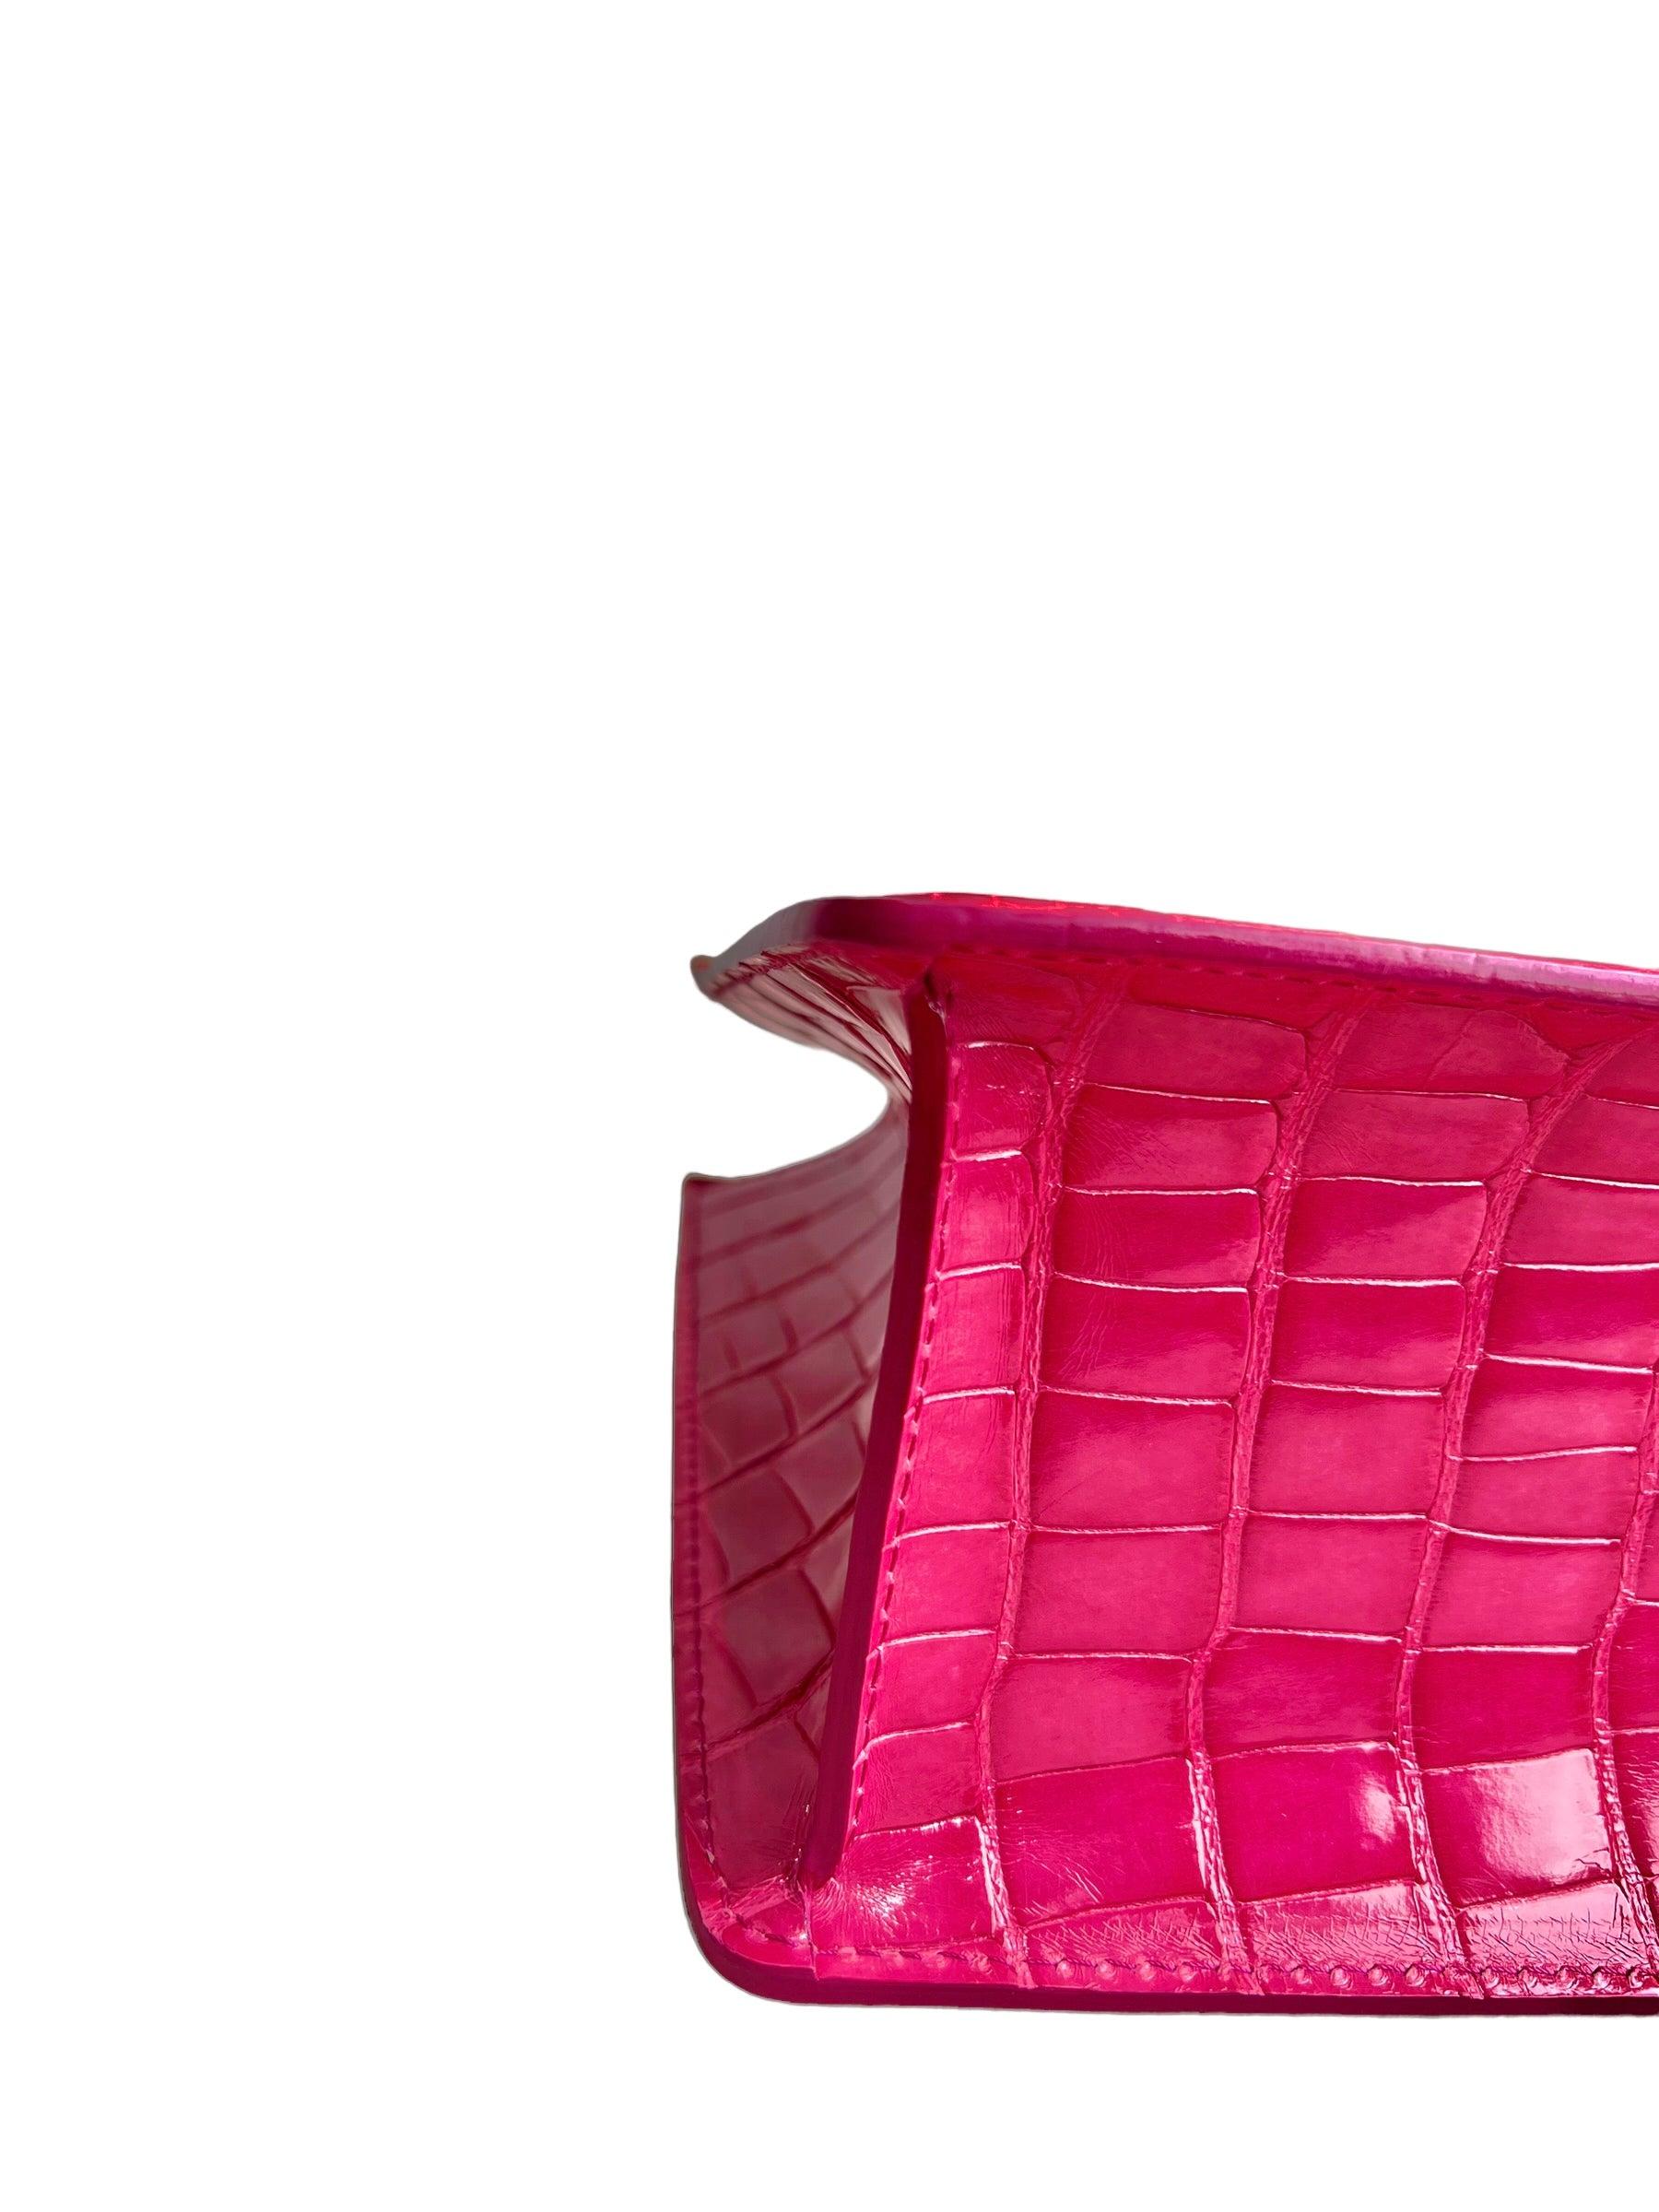 Louis Vuitton Deesse Exotic Leather Handbag 
Condition: Excellent condition
Colour: Fuchsia
Season: All 
Box: NO
material: Crocodile Leather 

Introducing the Louis Vuitton Deesse Exotic Leather Handbag in excellent condition. This exquisite handbag